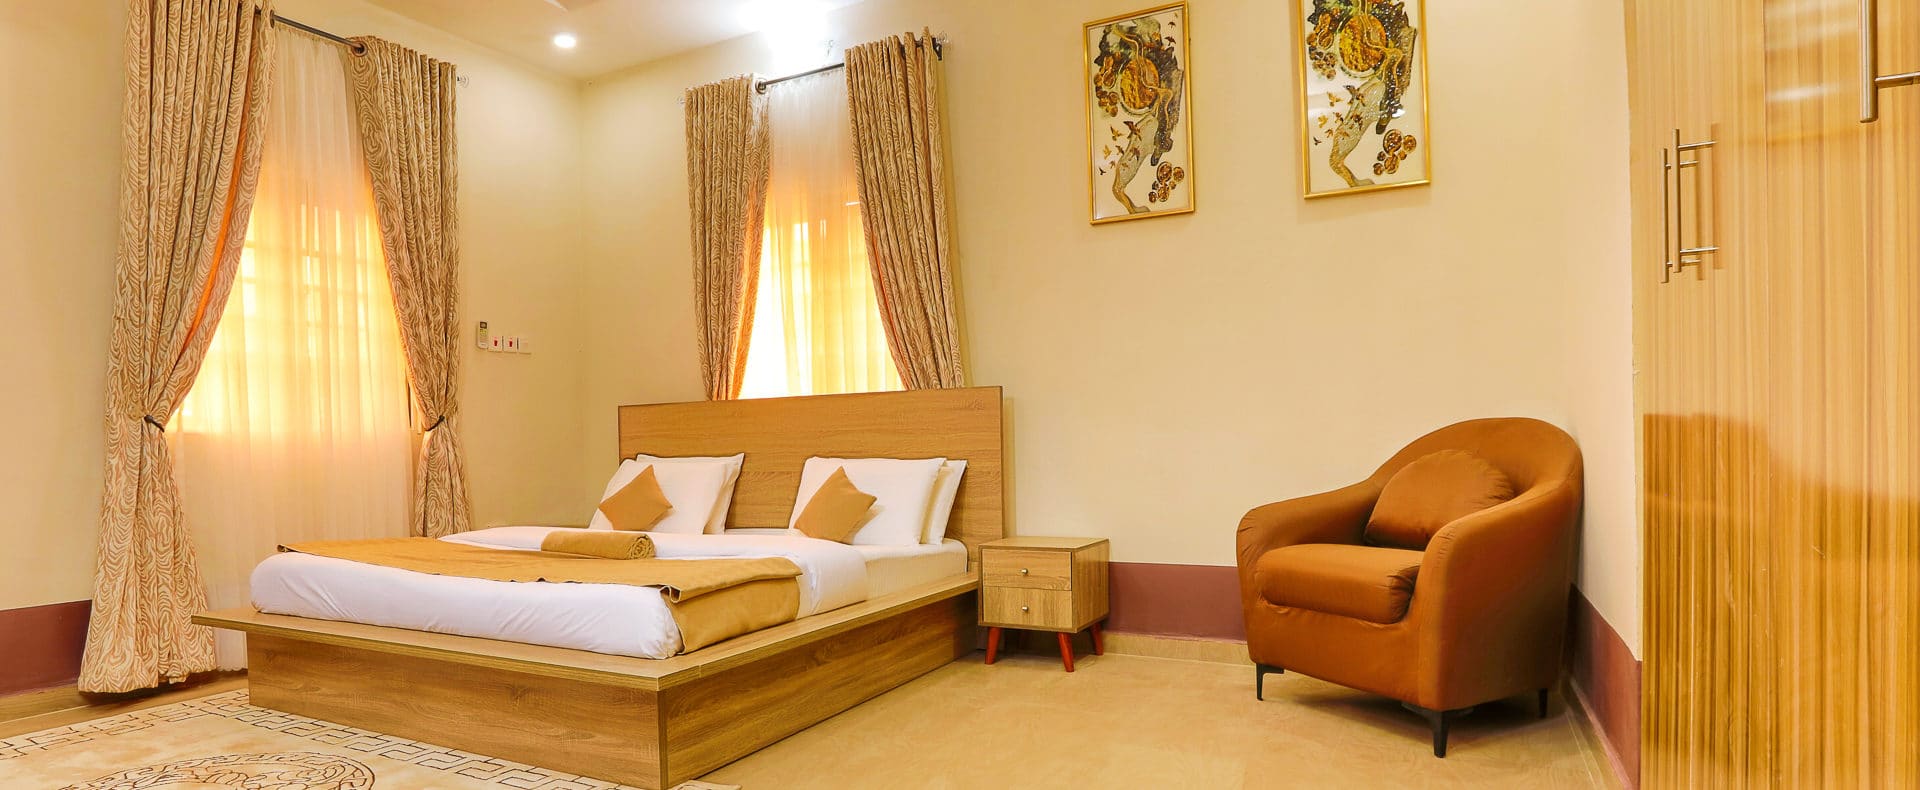 3 Bedroom Boho 3br Apartment By Utobert In Abuja Fct Nigeria